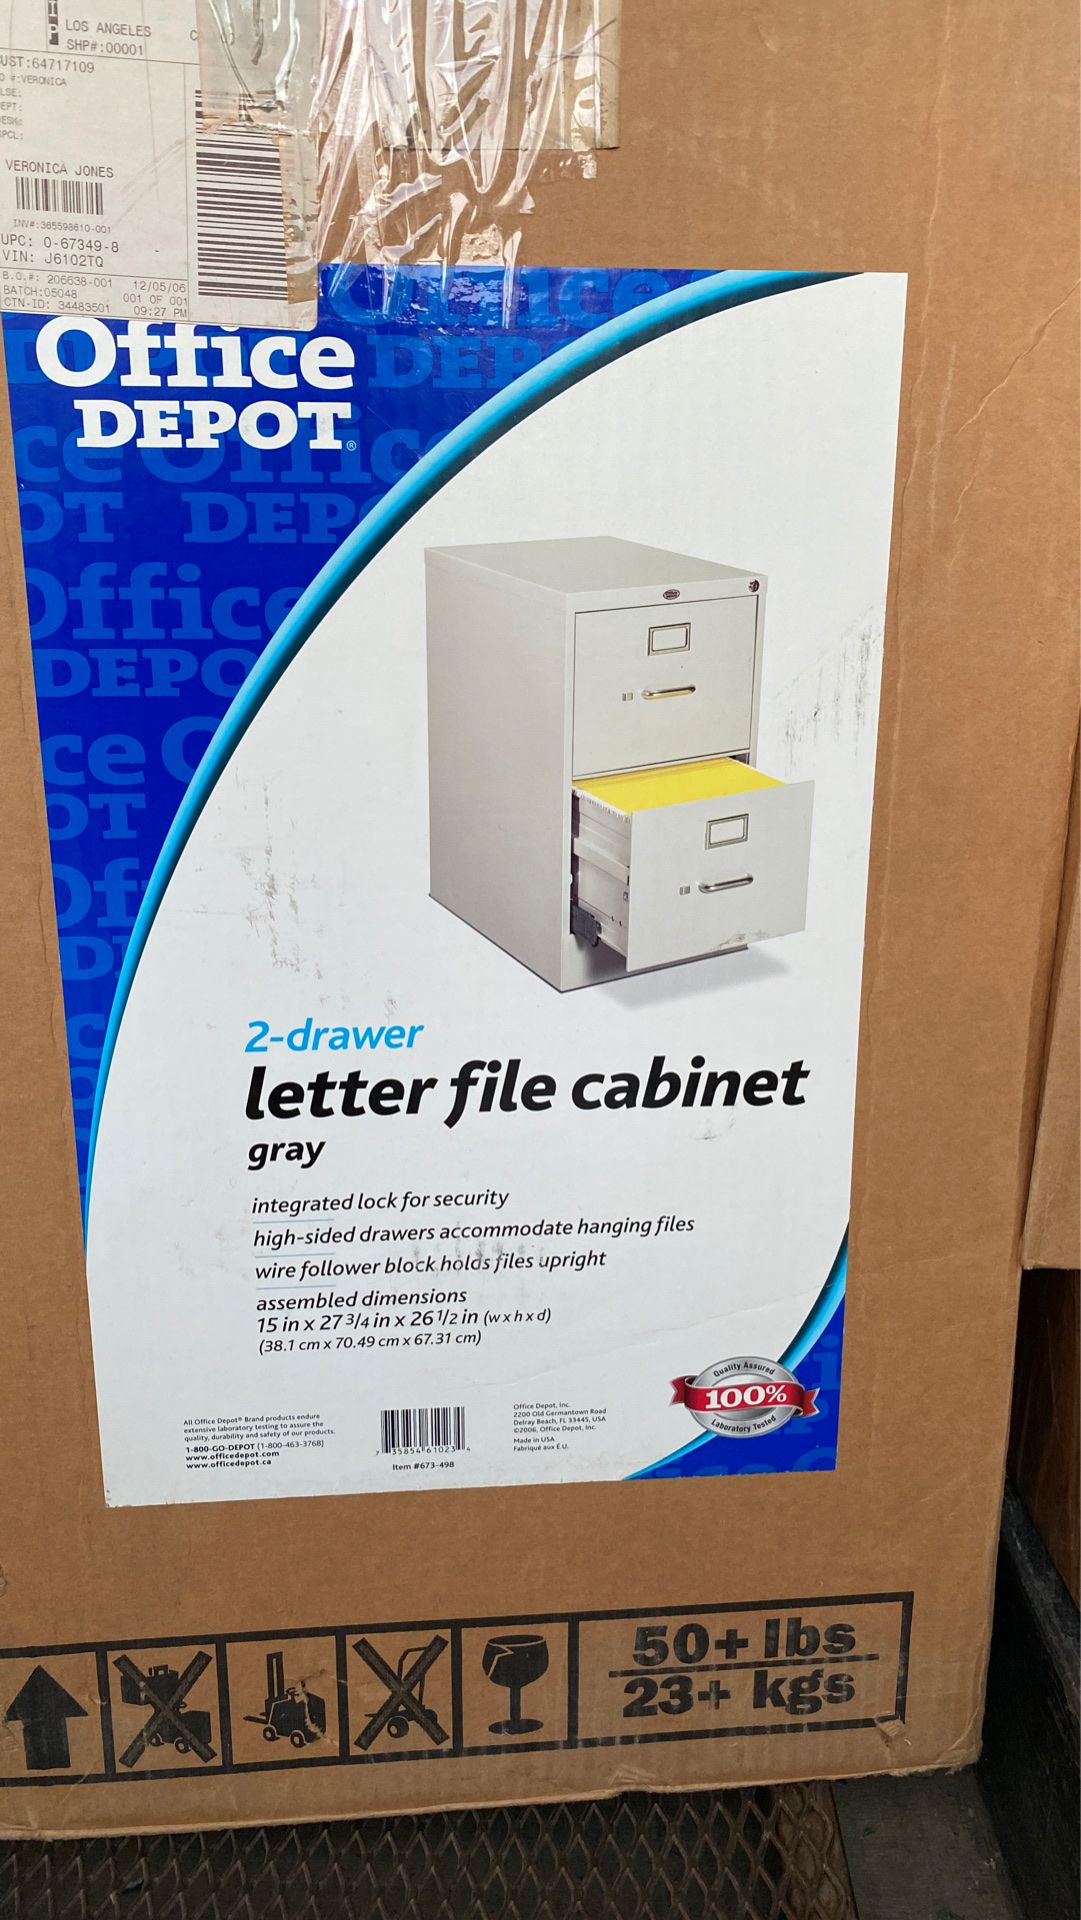 2-drawer letter file cabinet gray